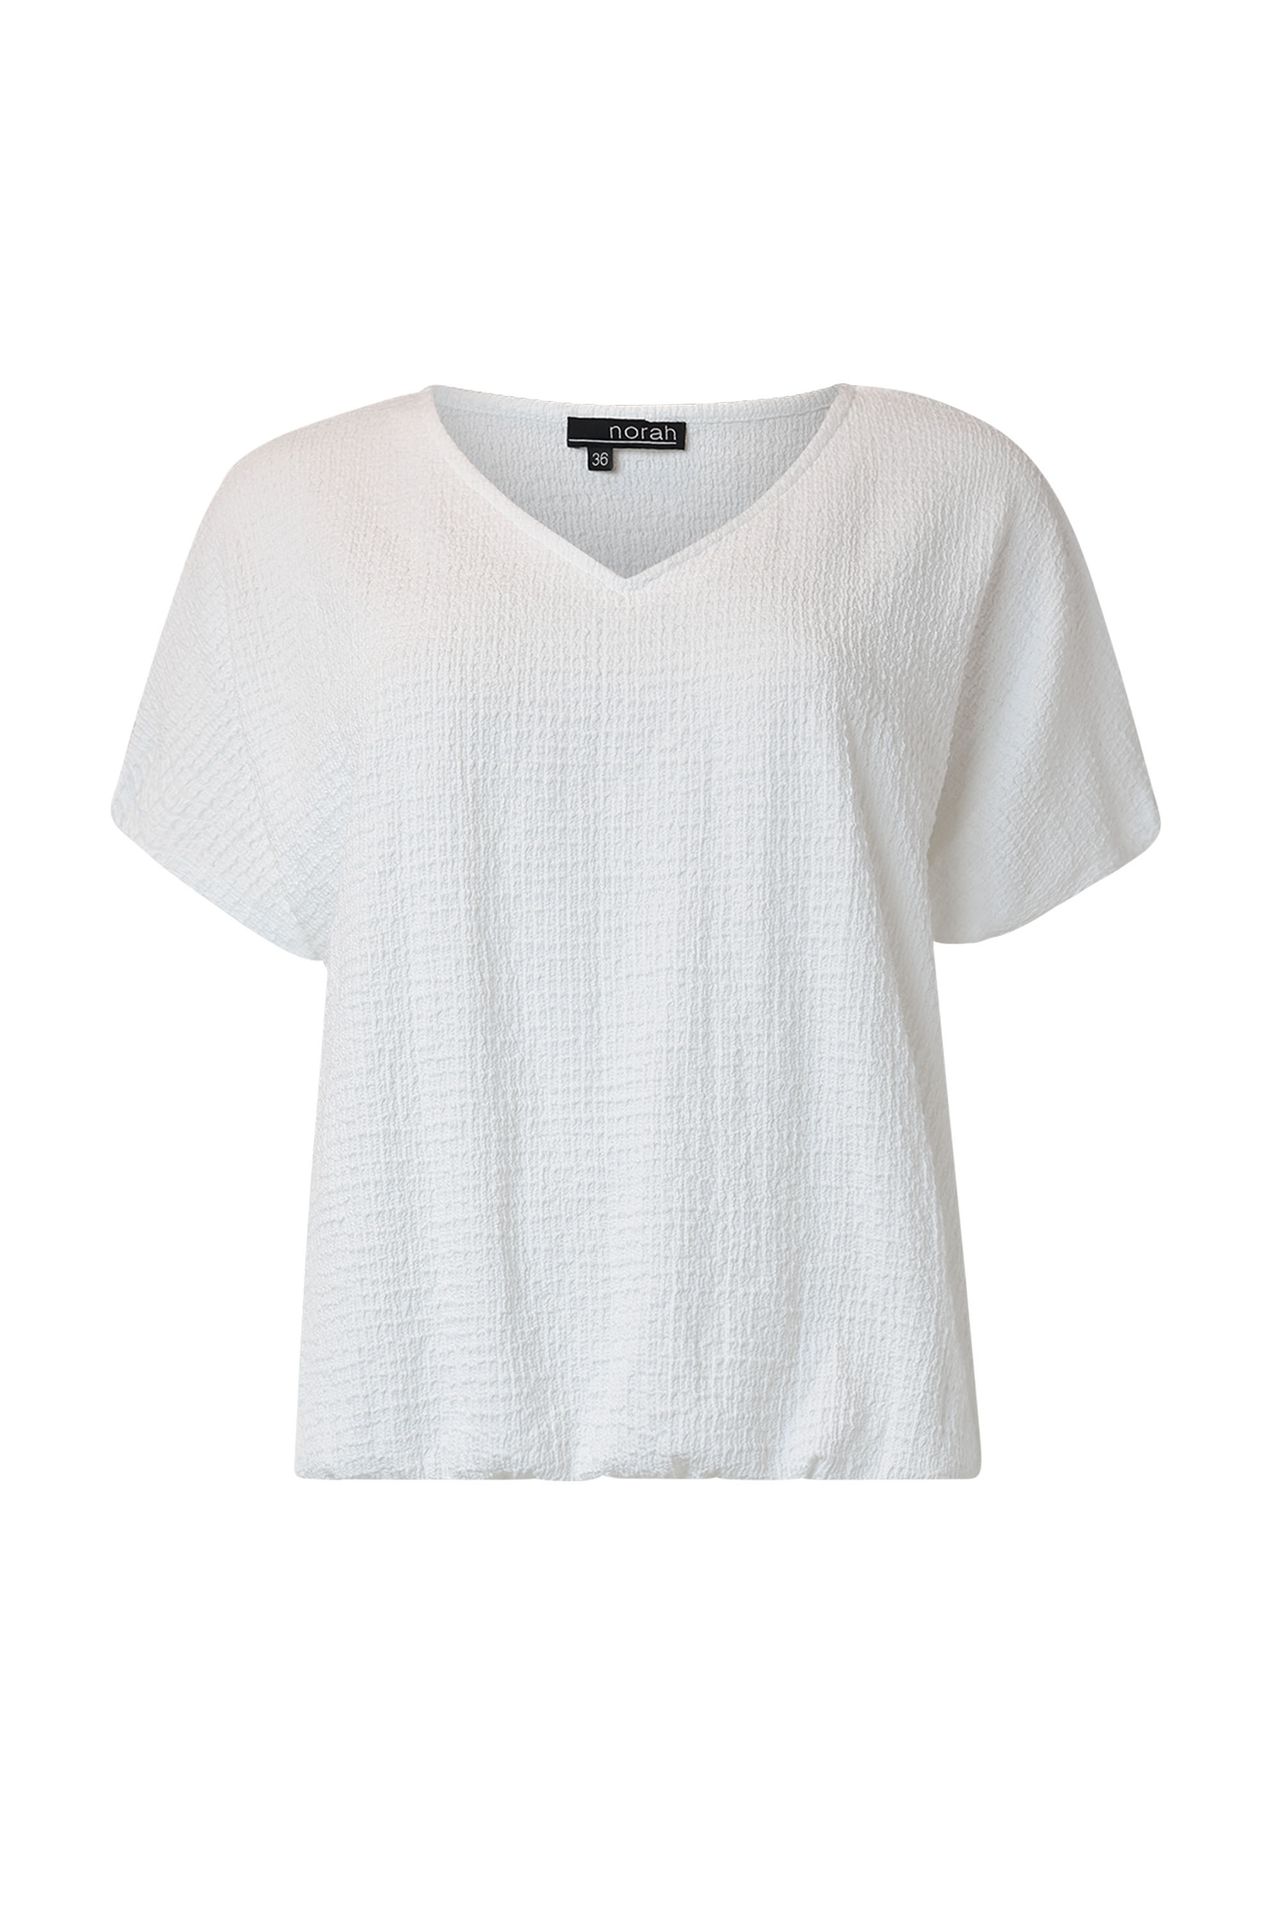 Norah Off white shirt met V-hals off-white 214518-101